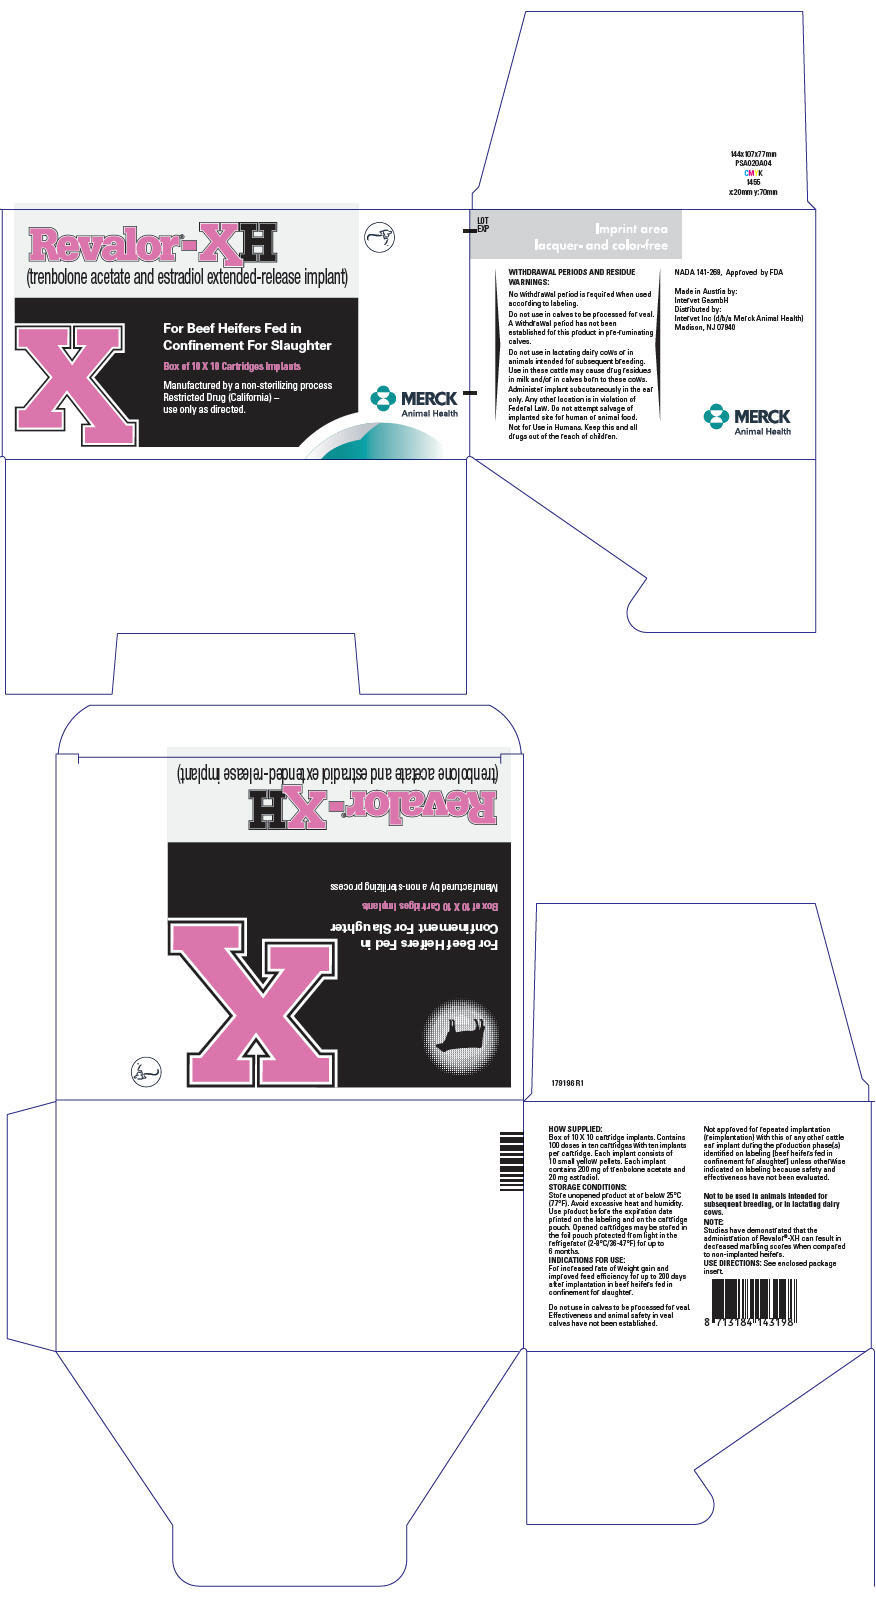 PRINCIPAL DISPLAY PANEL - 10 x 10 Cartridge Implant Carton